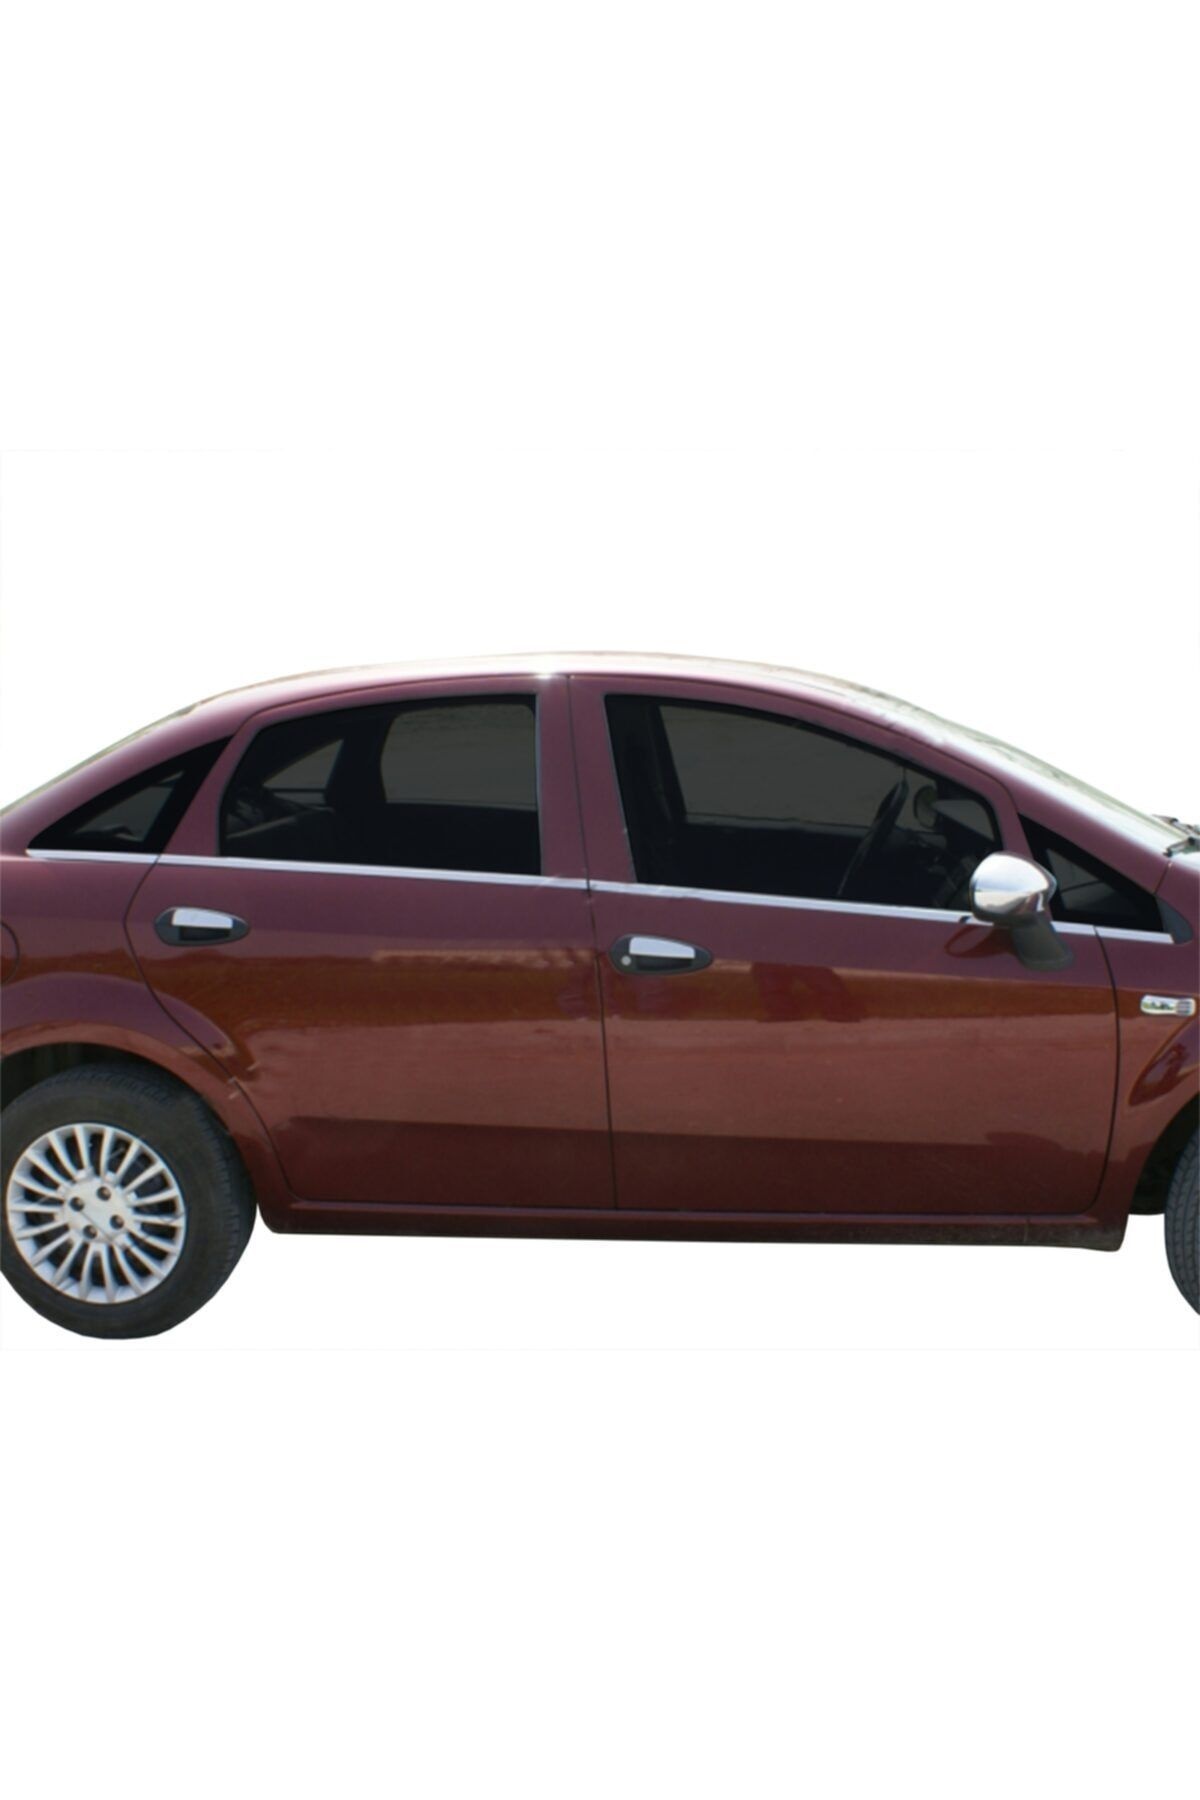 Fiat Linea Cam Çıtası 8 Prç Krom 2006-2012